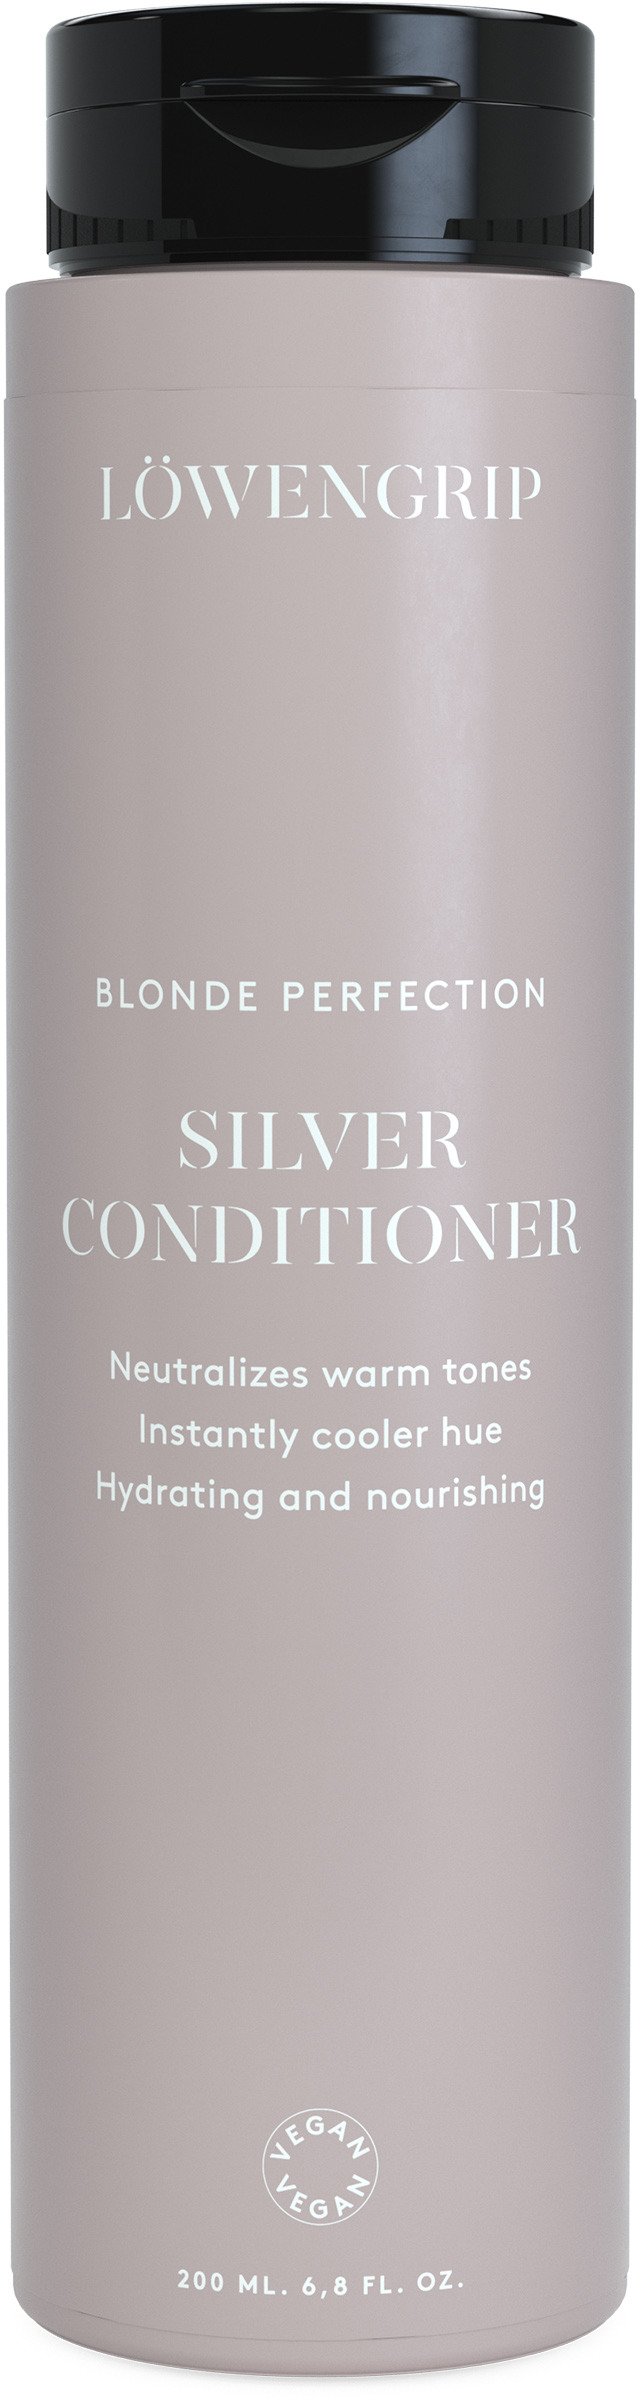 Löwengrip Blonde Perfection Silver Conditioner 200 ml